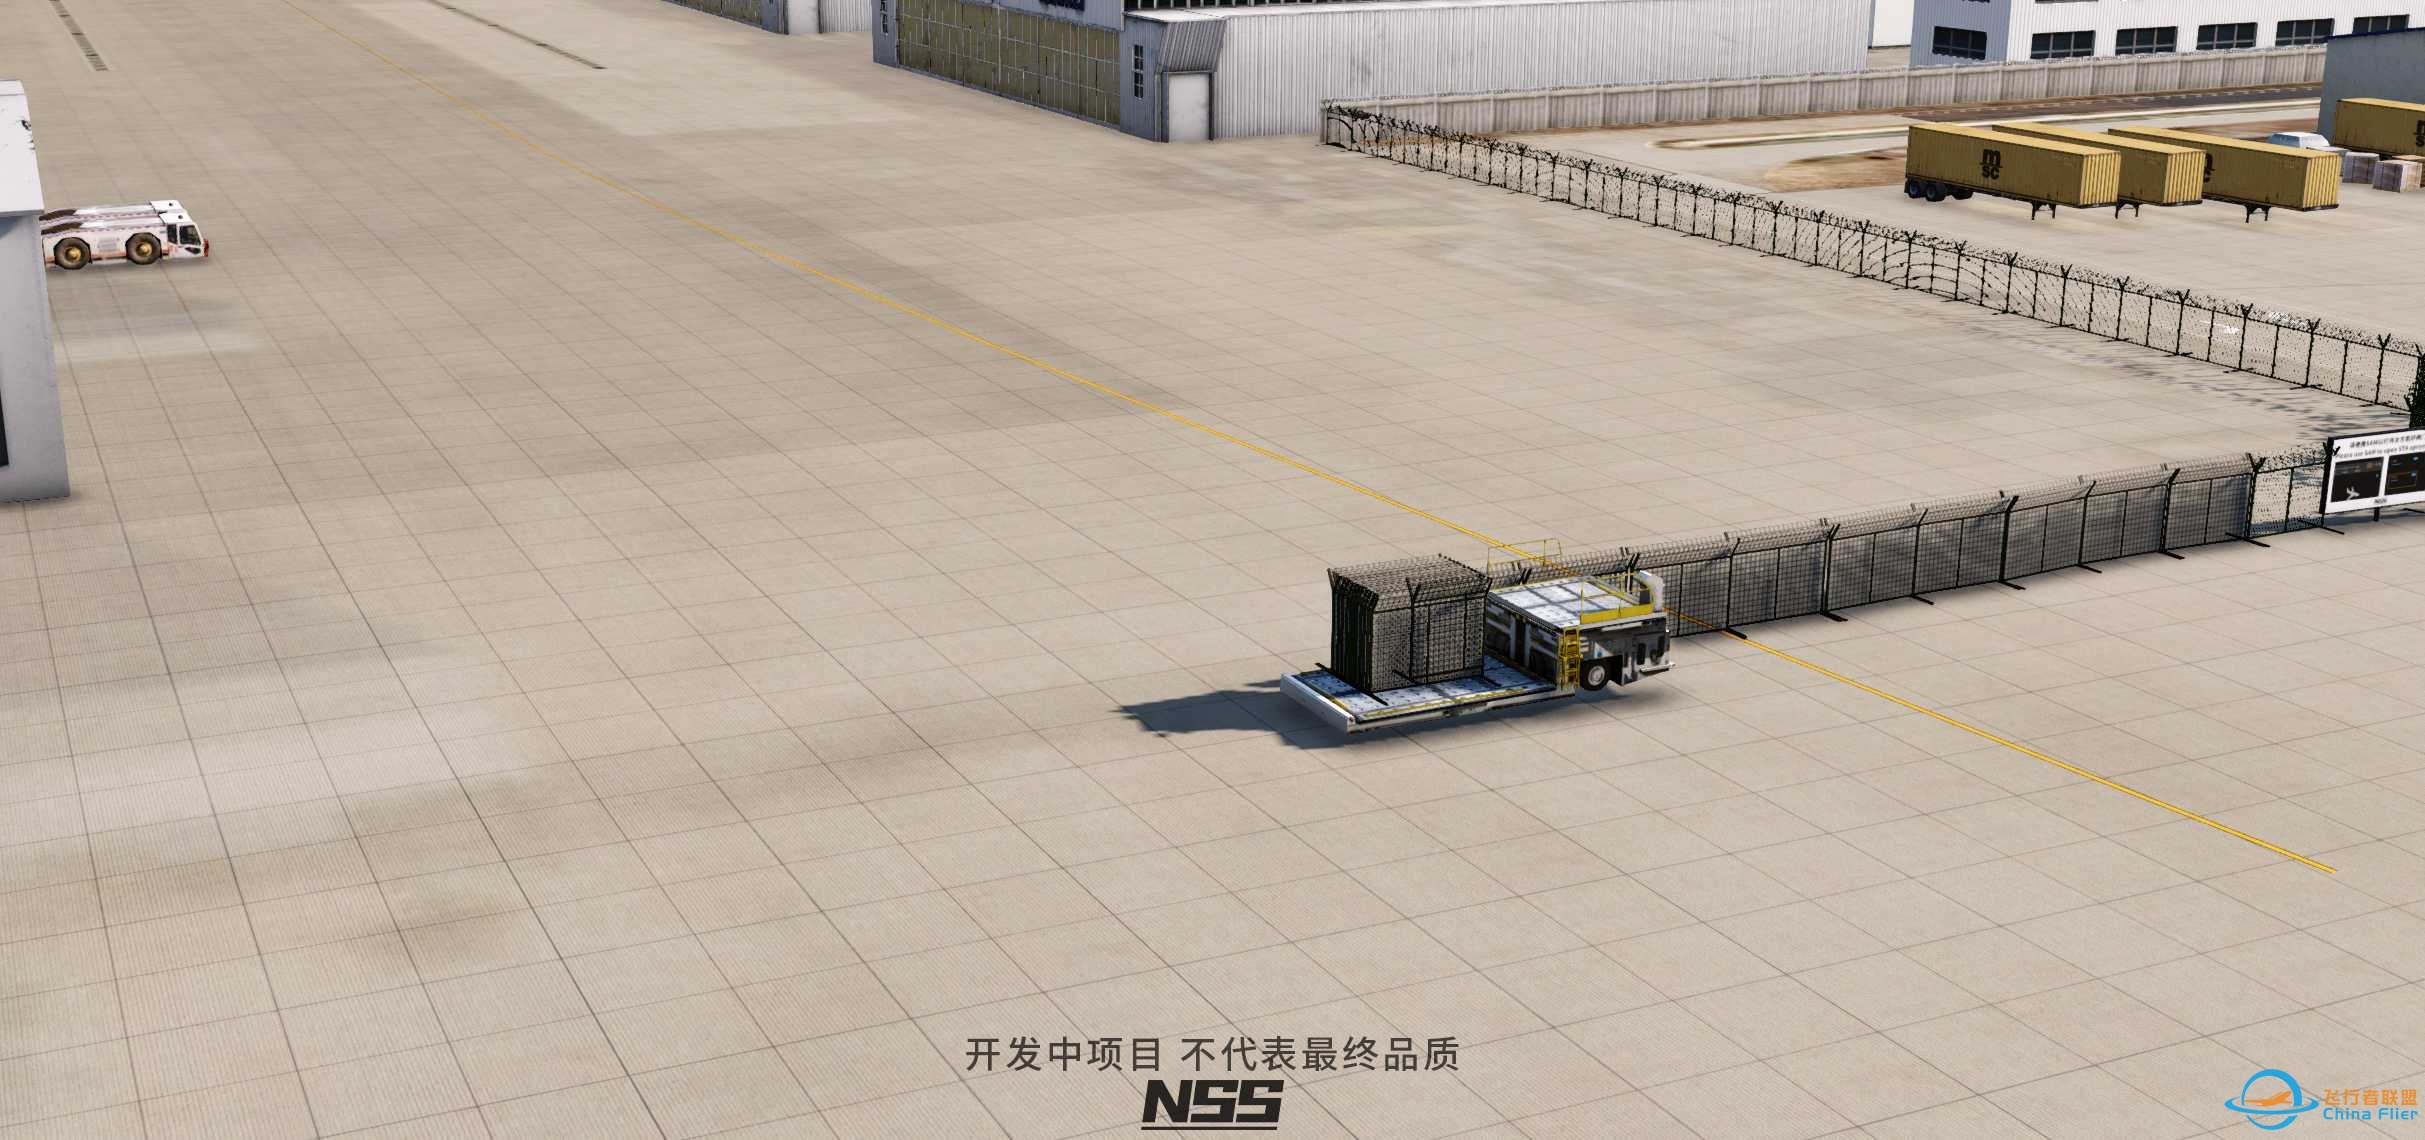 NSS地景开发组 ZSJN 济南遥墙国际机场项目预览 兼公布-6667 